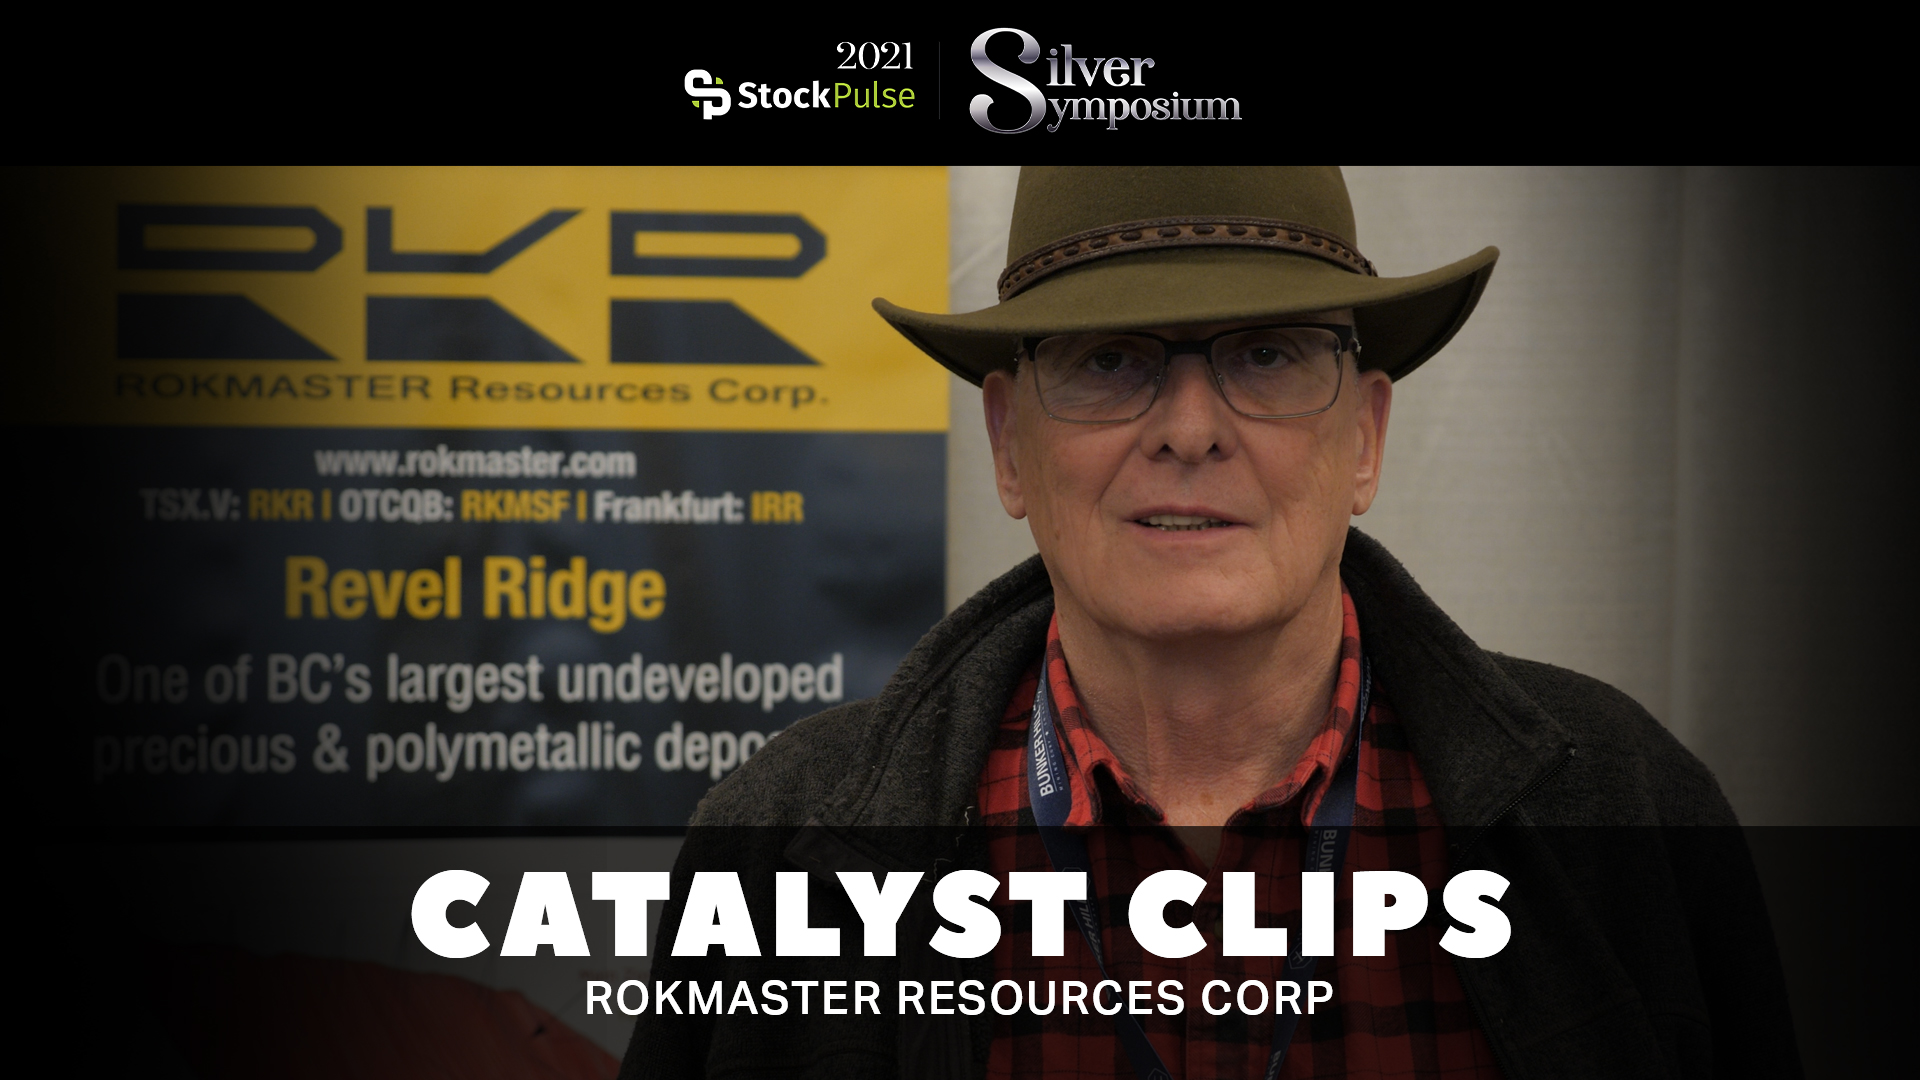 2021 StockPulse Silver Symposium Catalyst Clips | John Mirko of Rokmaster Resources Corp